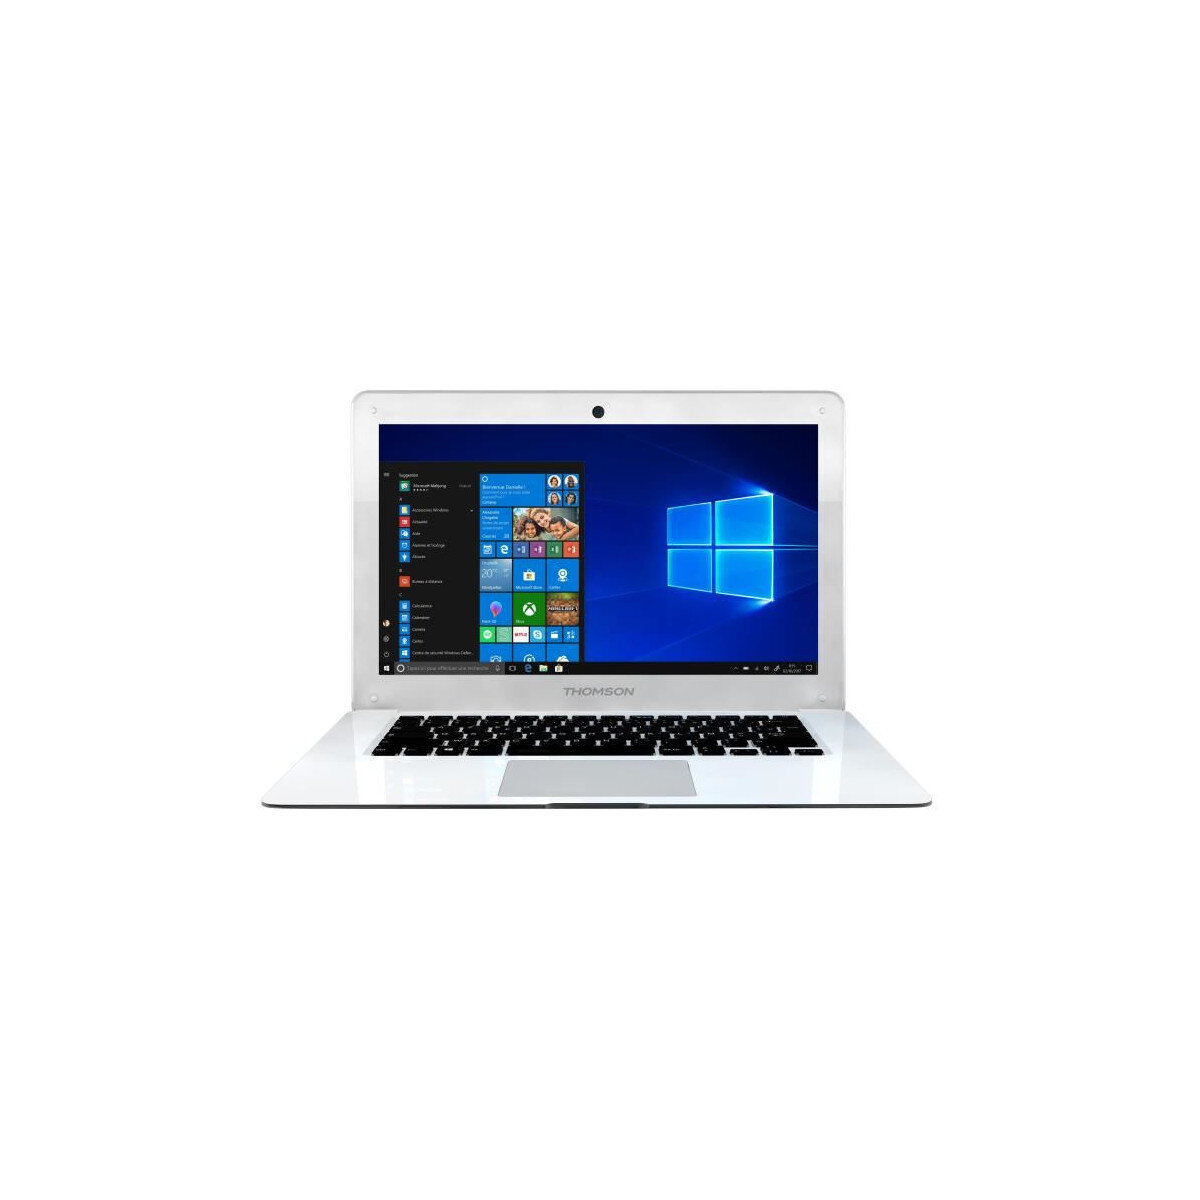 PC Portable - THOMSON - NEO13 - 13,3 HD - Intel Celeron - RAM 4Go -  Stockage 64Go eMMC - Windows 10 S - AZERTY - Cdiscount Informatique